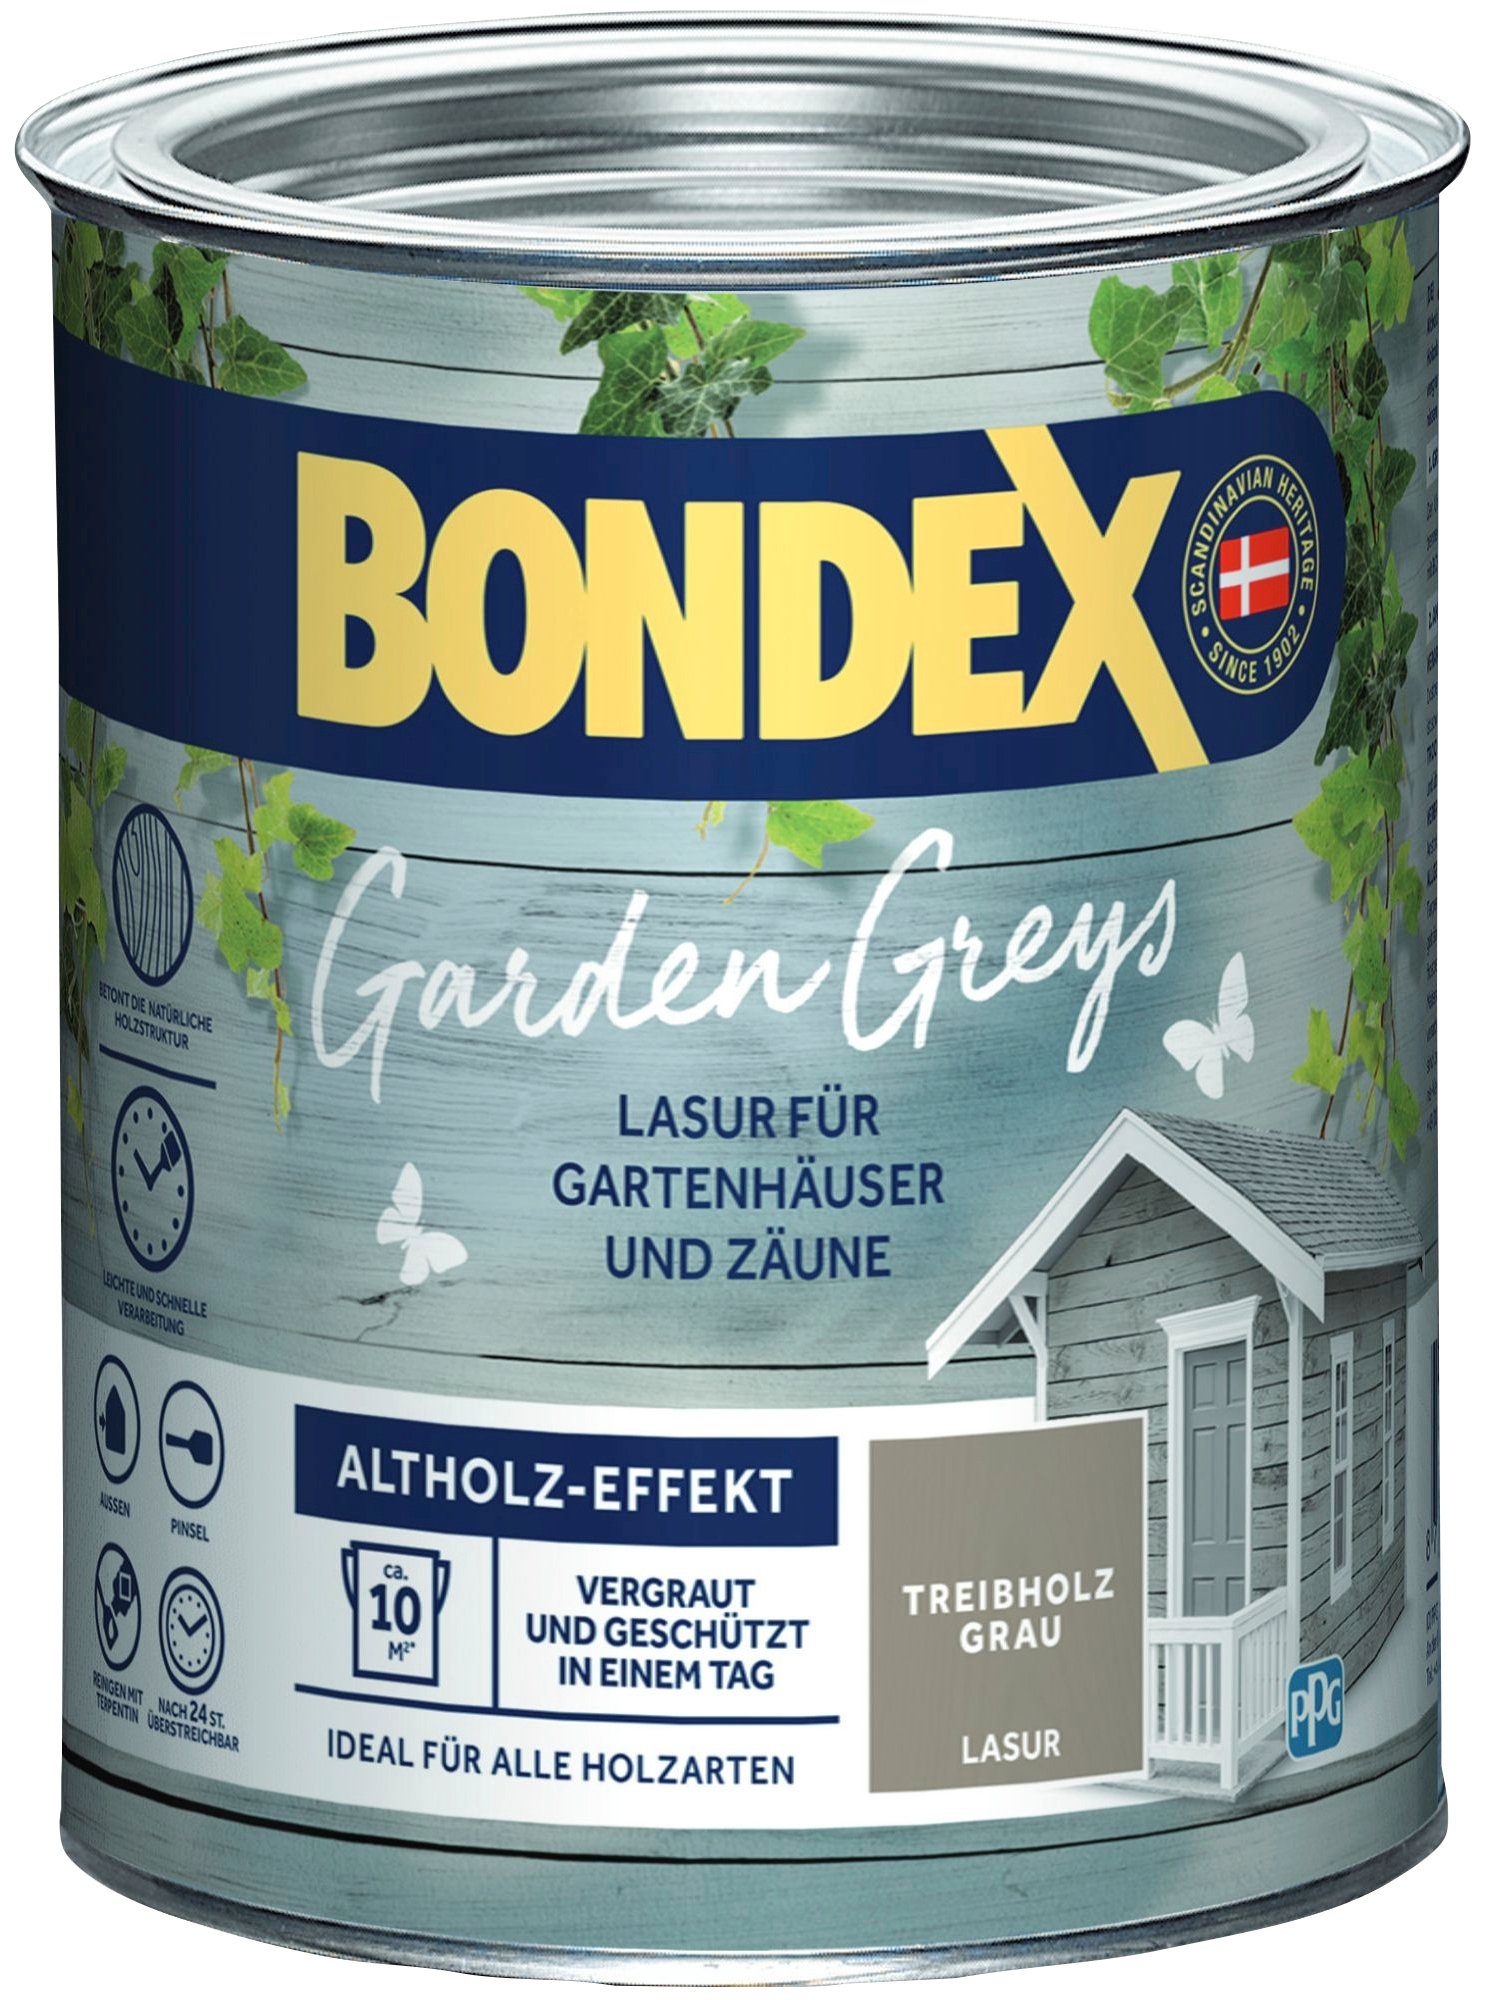 Bondex Holzschutzlasur Garden Liter 0,75 Inhalt Grau, Greys, Treibholz